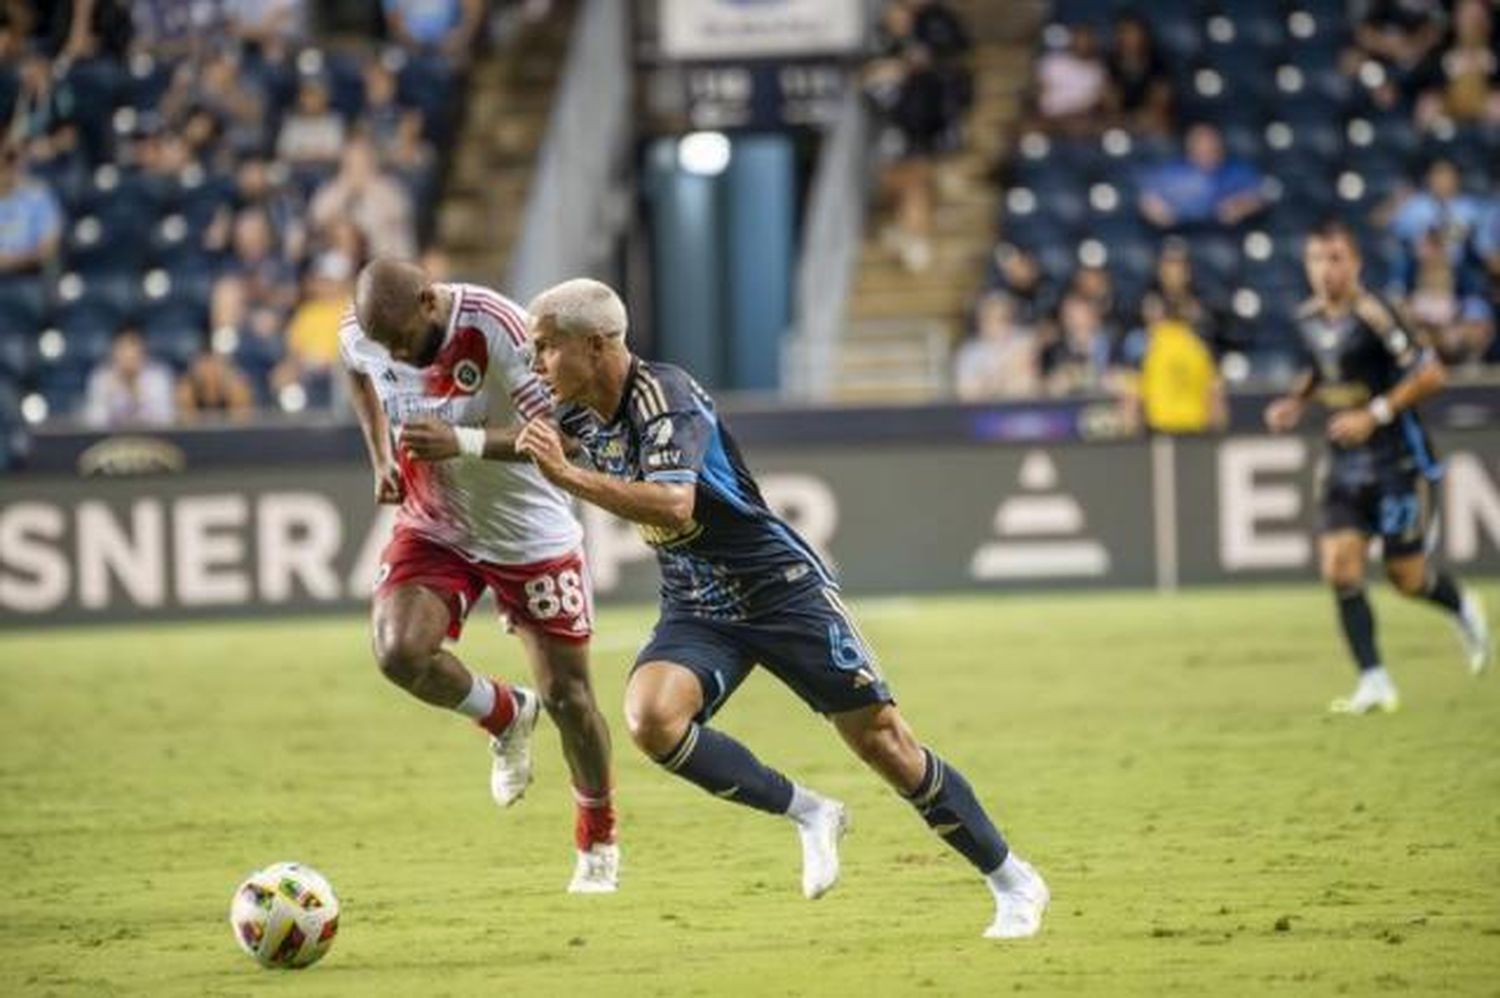 Cavan Sullivan's Historic MLS Debut at 14: A New Era in Soccer